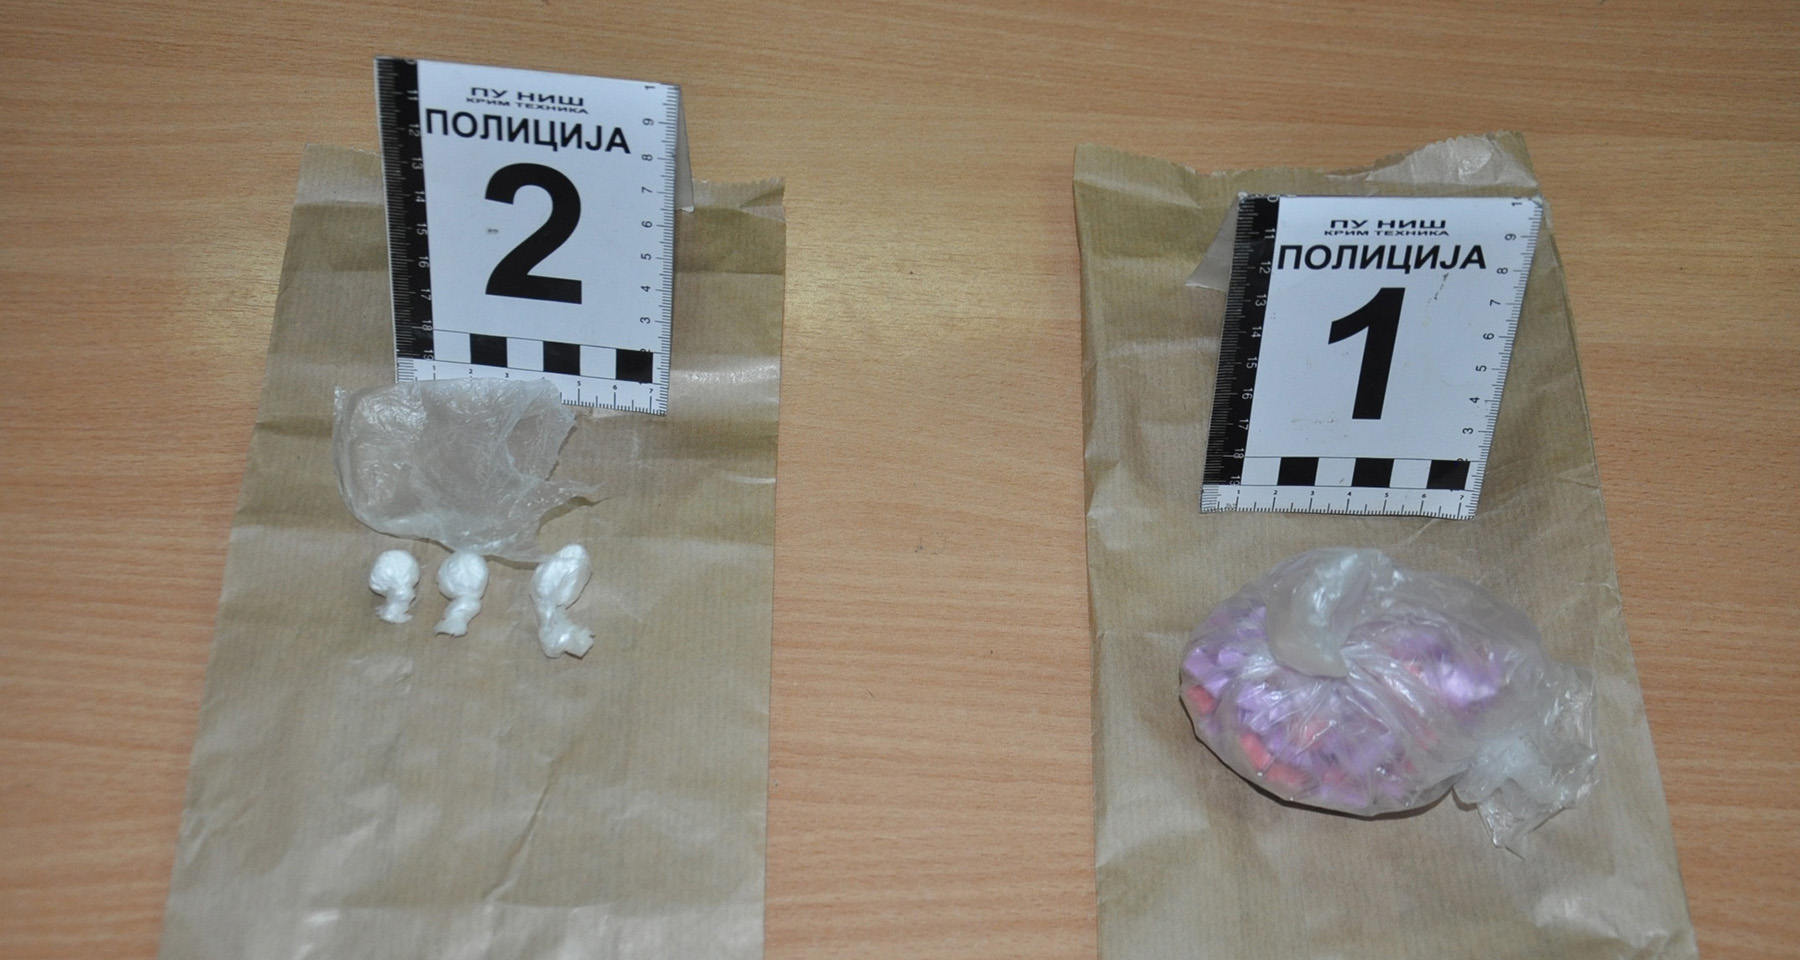 Zaplenjene tablete MDMA i kokain